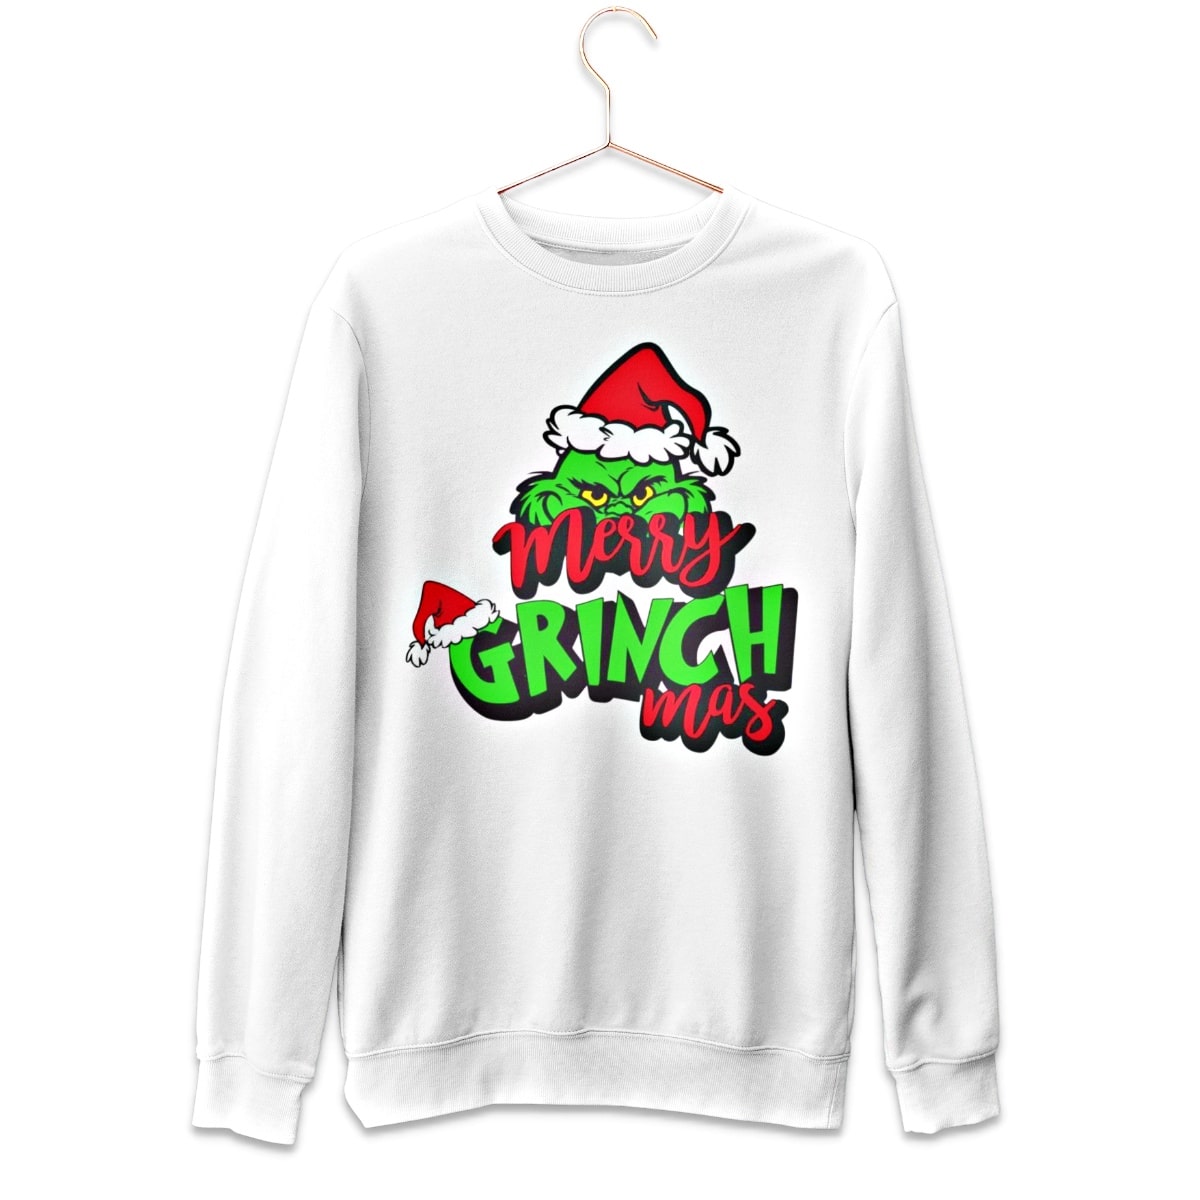 Merry Grinchmas Ugly Christmas Sweater - Santaland